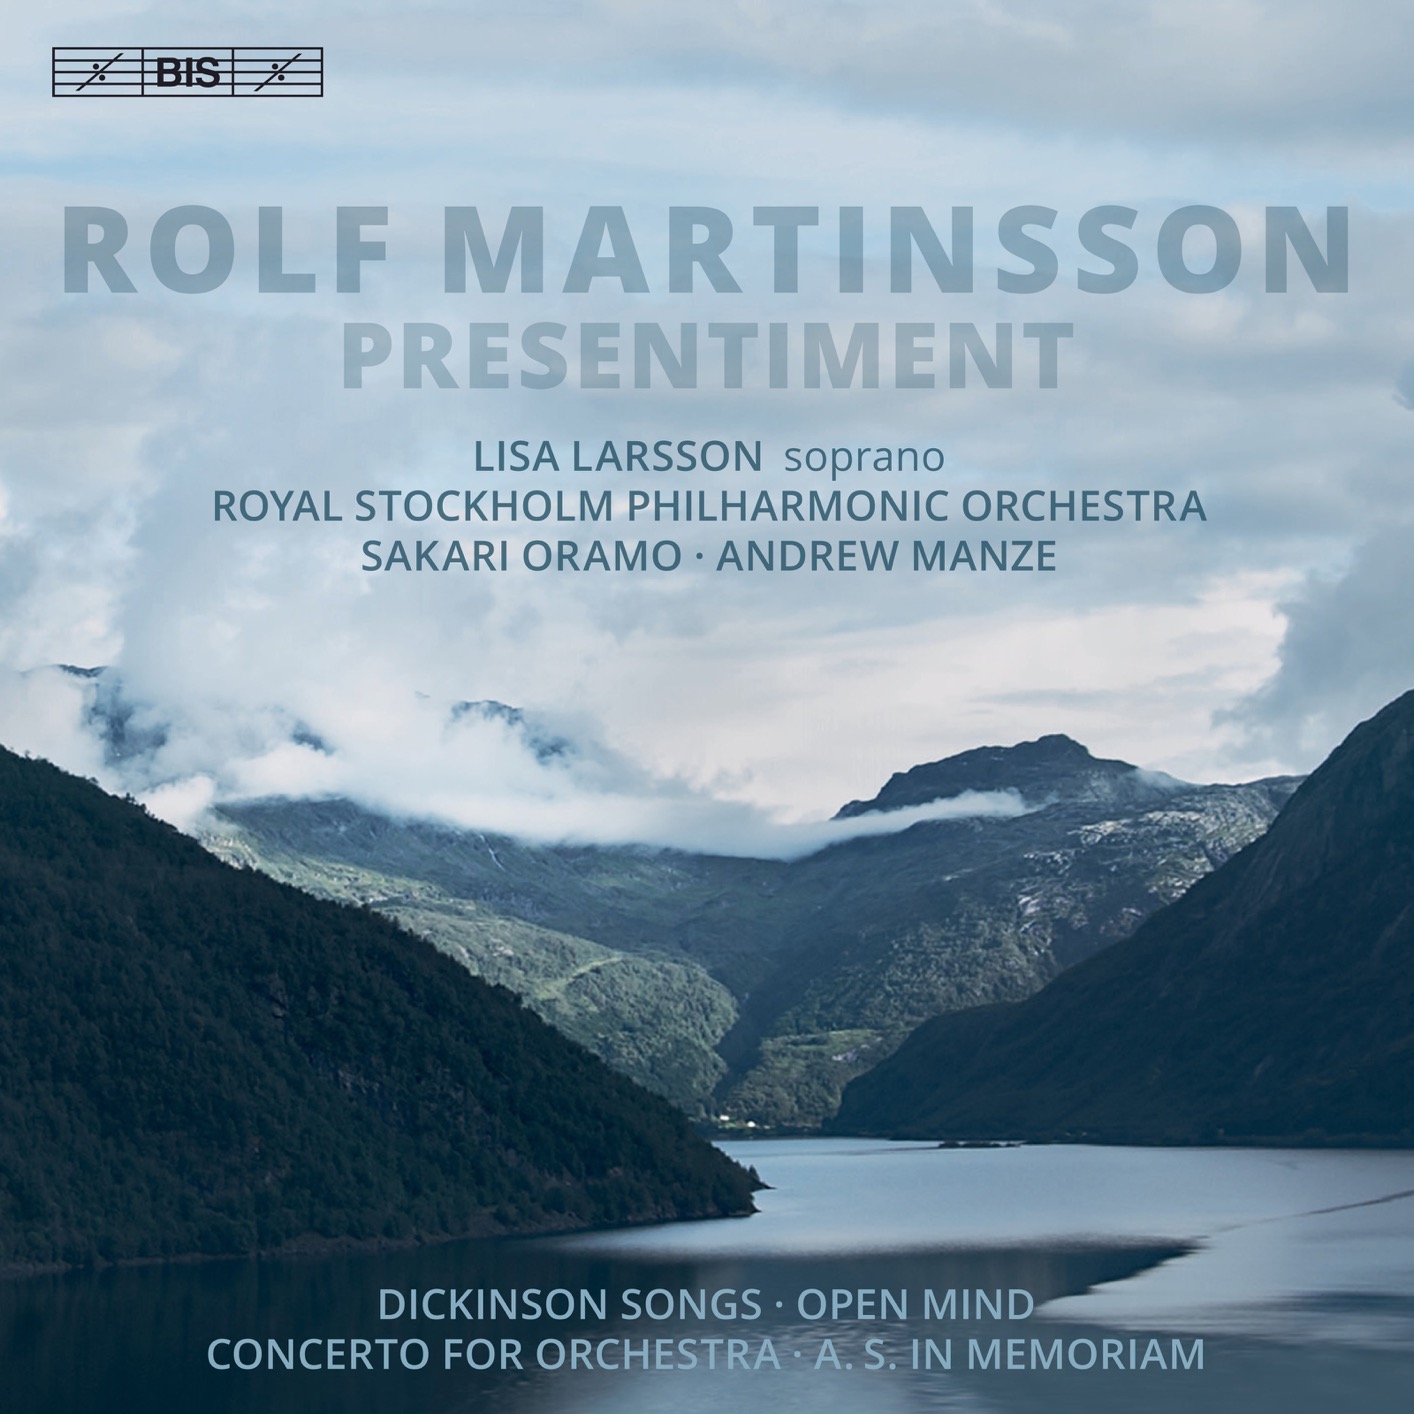 Royal Stockholm Philharmonic Orchestra & Andrew Manze – Martinsson: Presentiment (2018) [FLAC 24bit/96kHz]